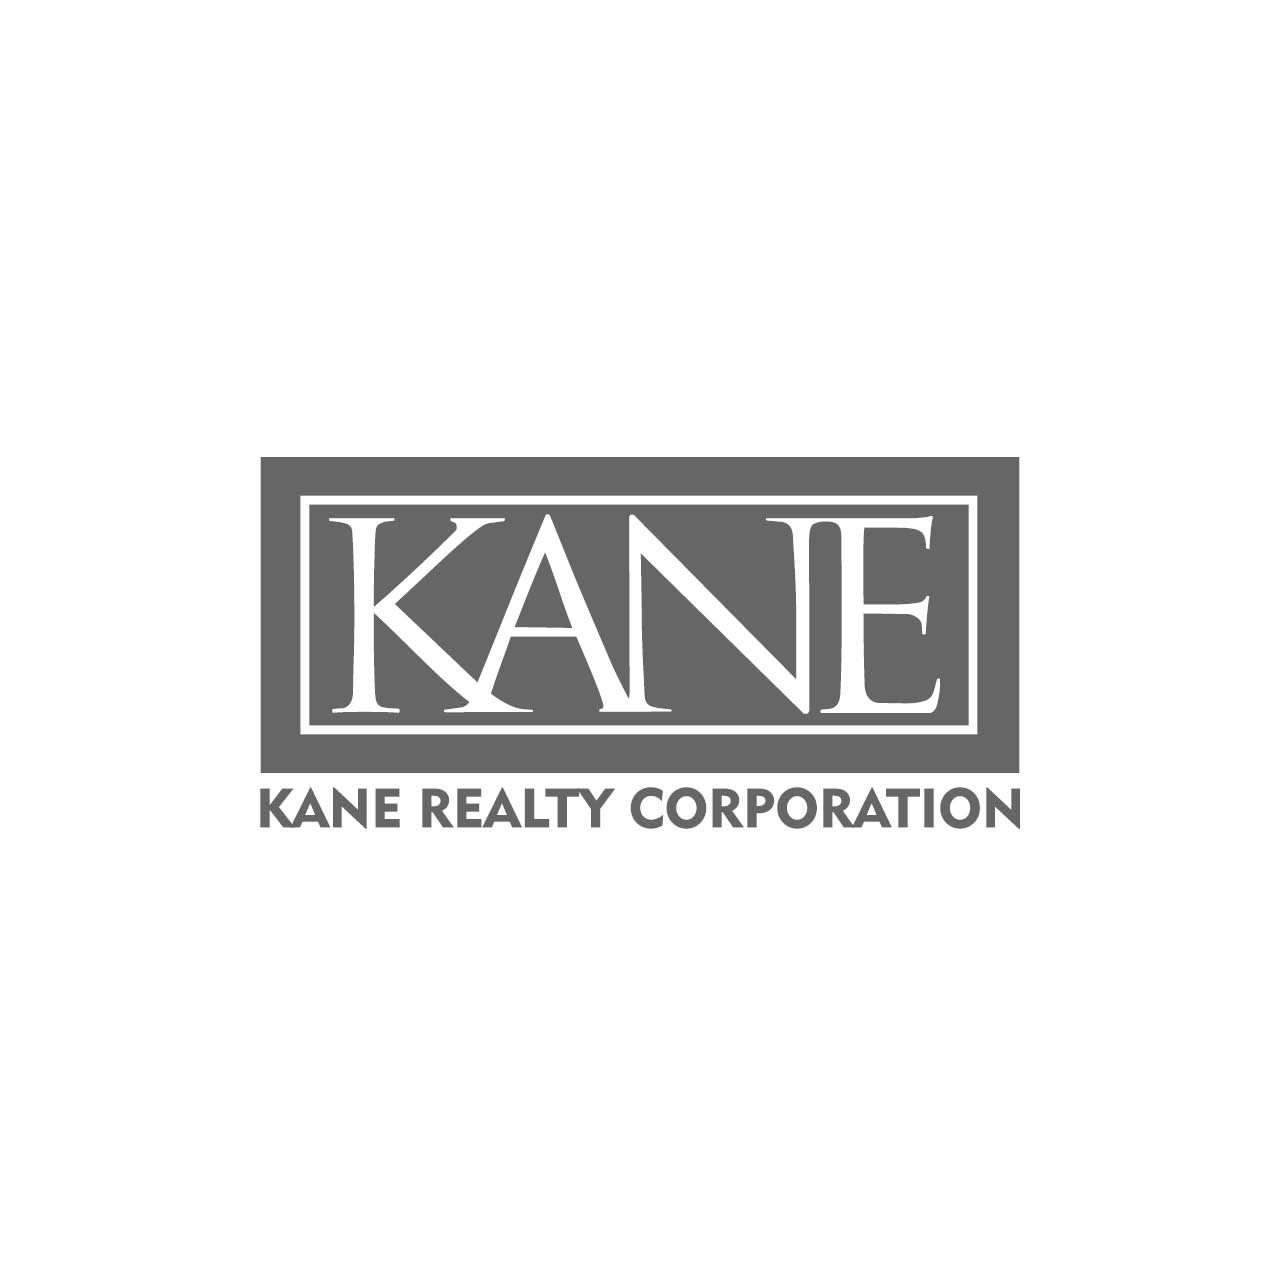 Previous Kane Logo